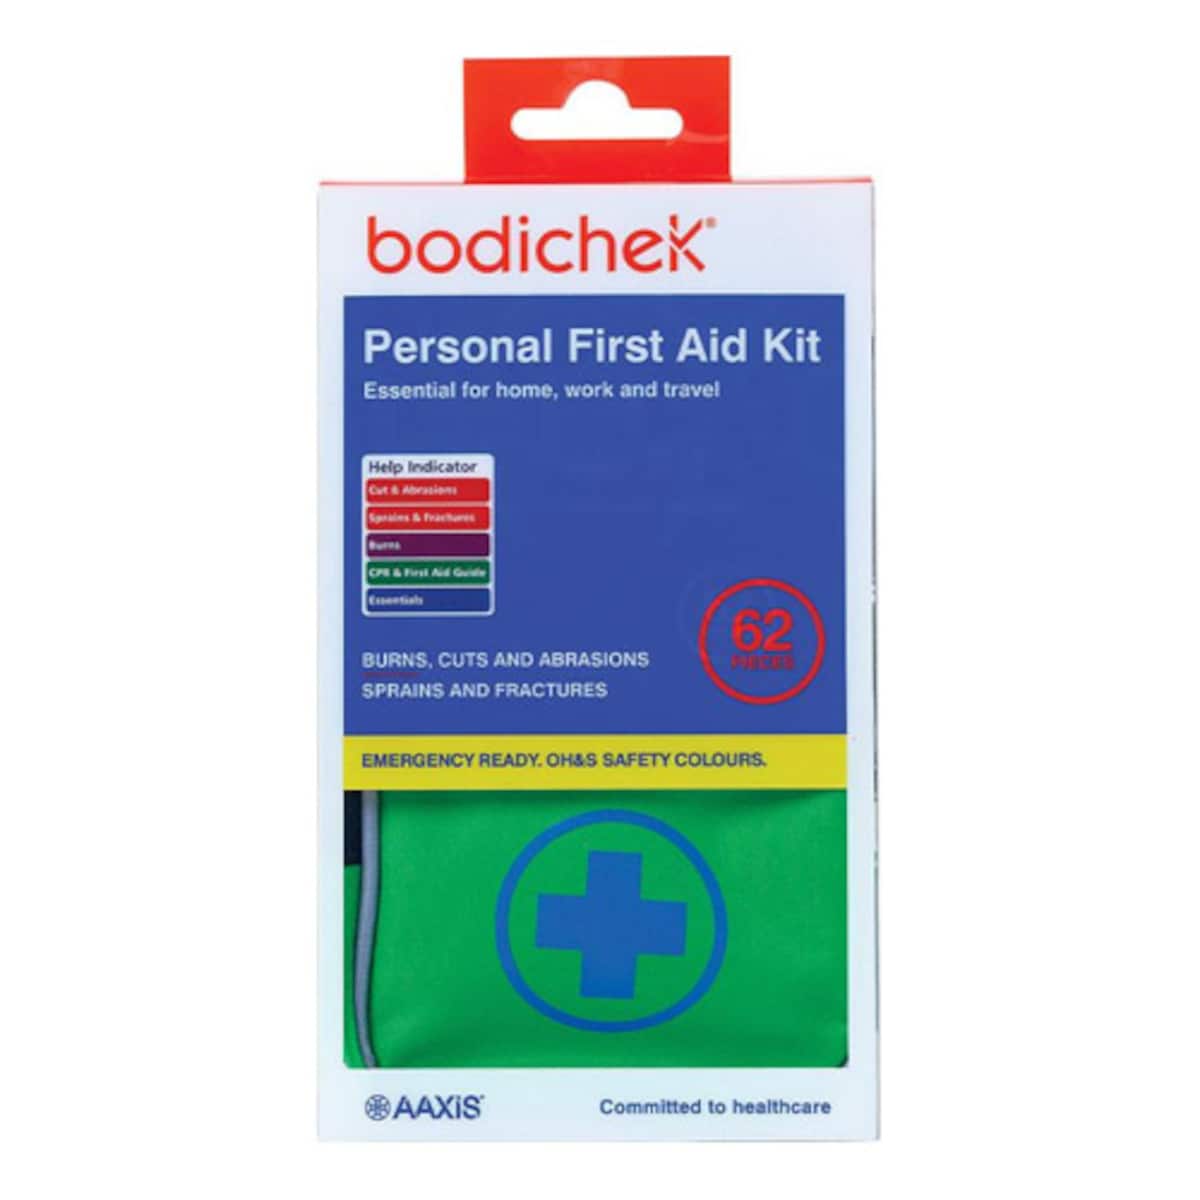 Bodichek First Aid Kit 62 Pieces